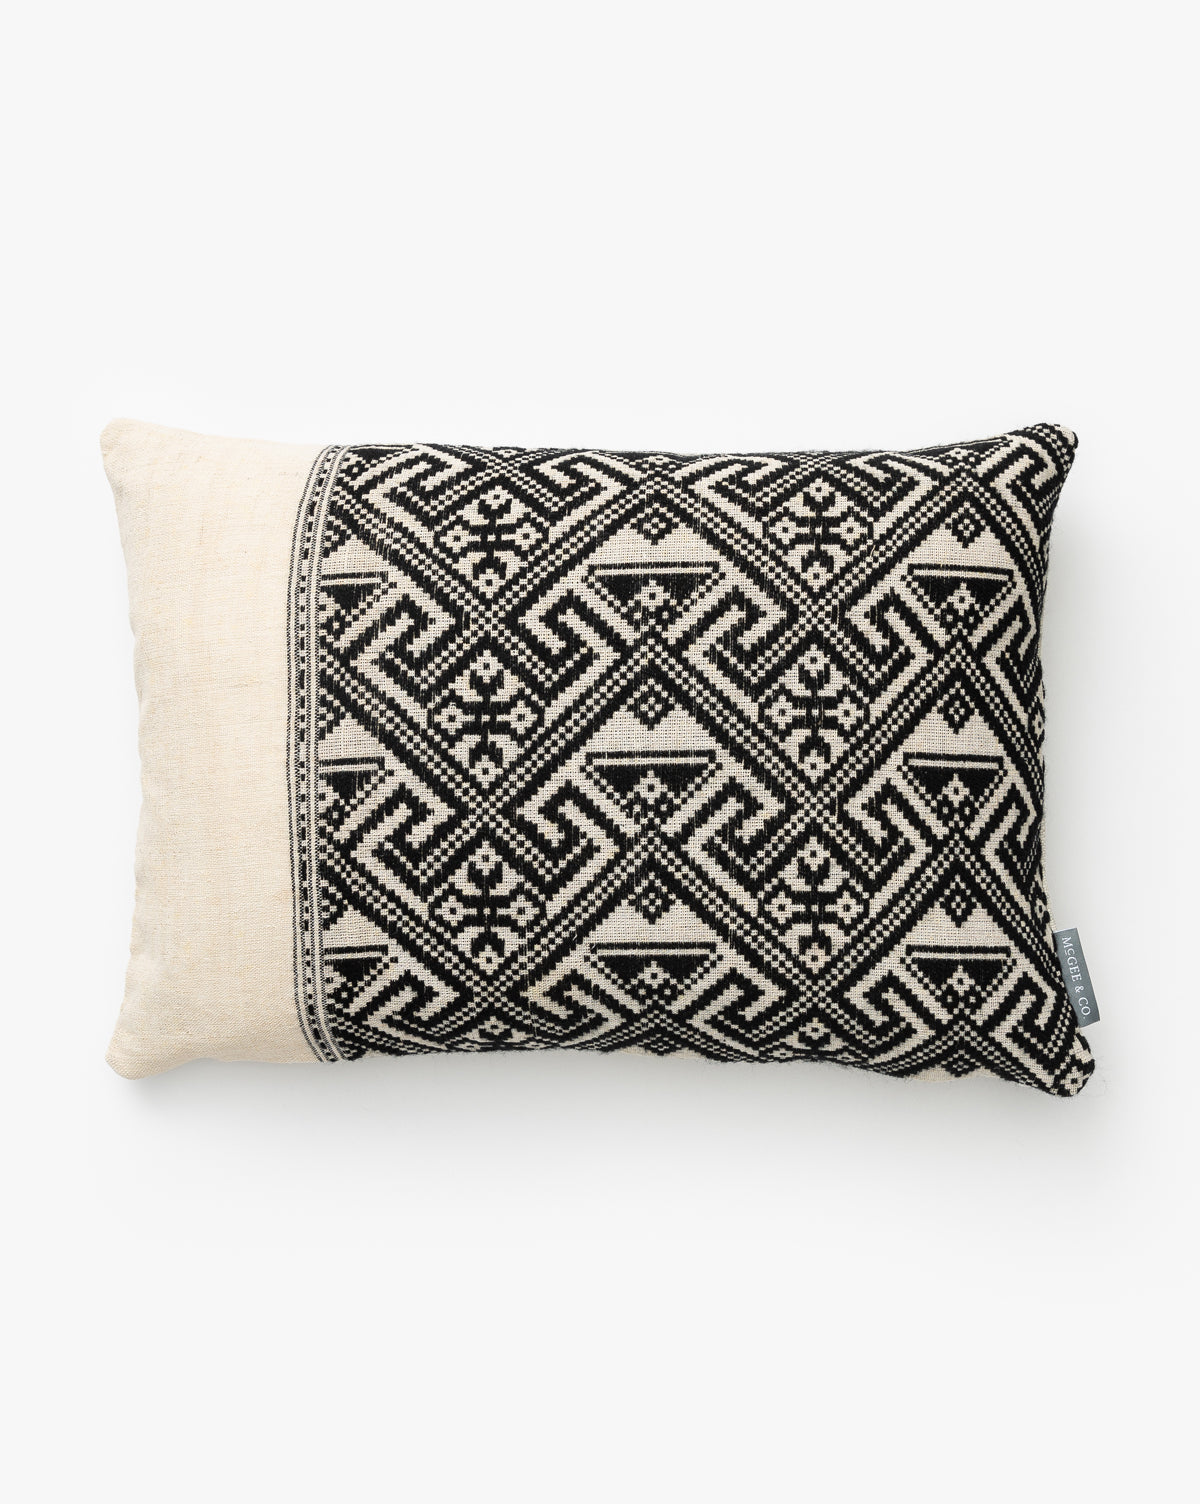 Tangren, Vintage Black Tribal Print Pillow Cover No. 5